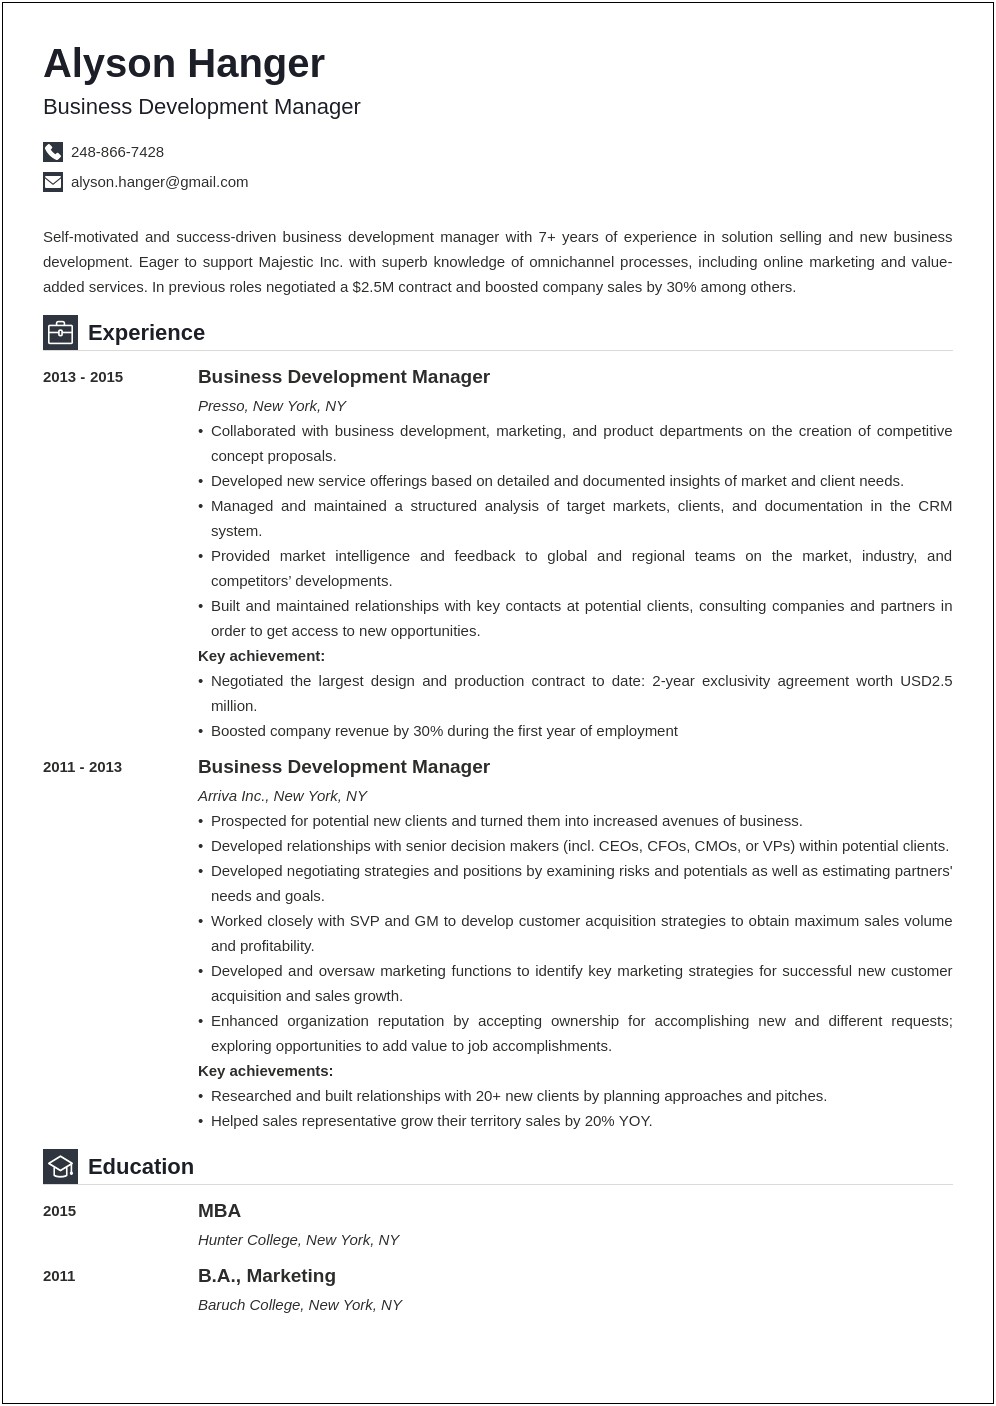 Best Resume For Business Development Manager